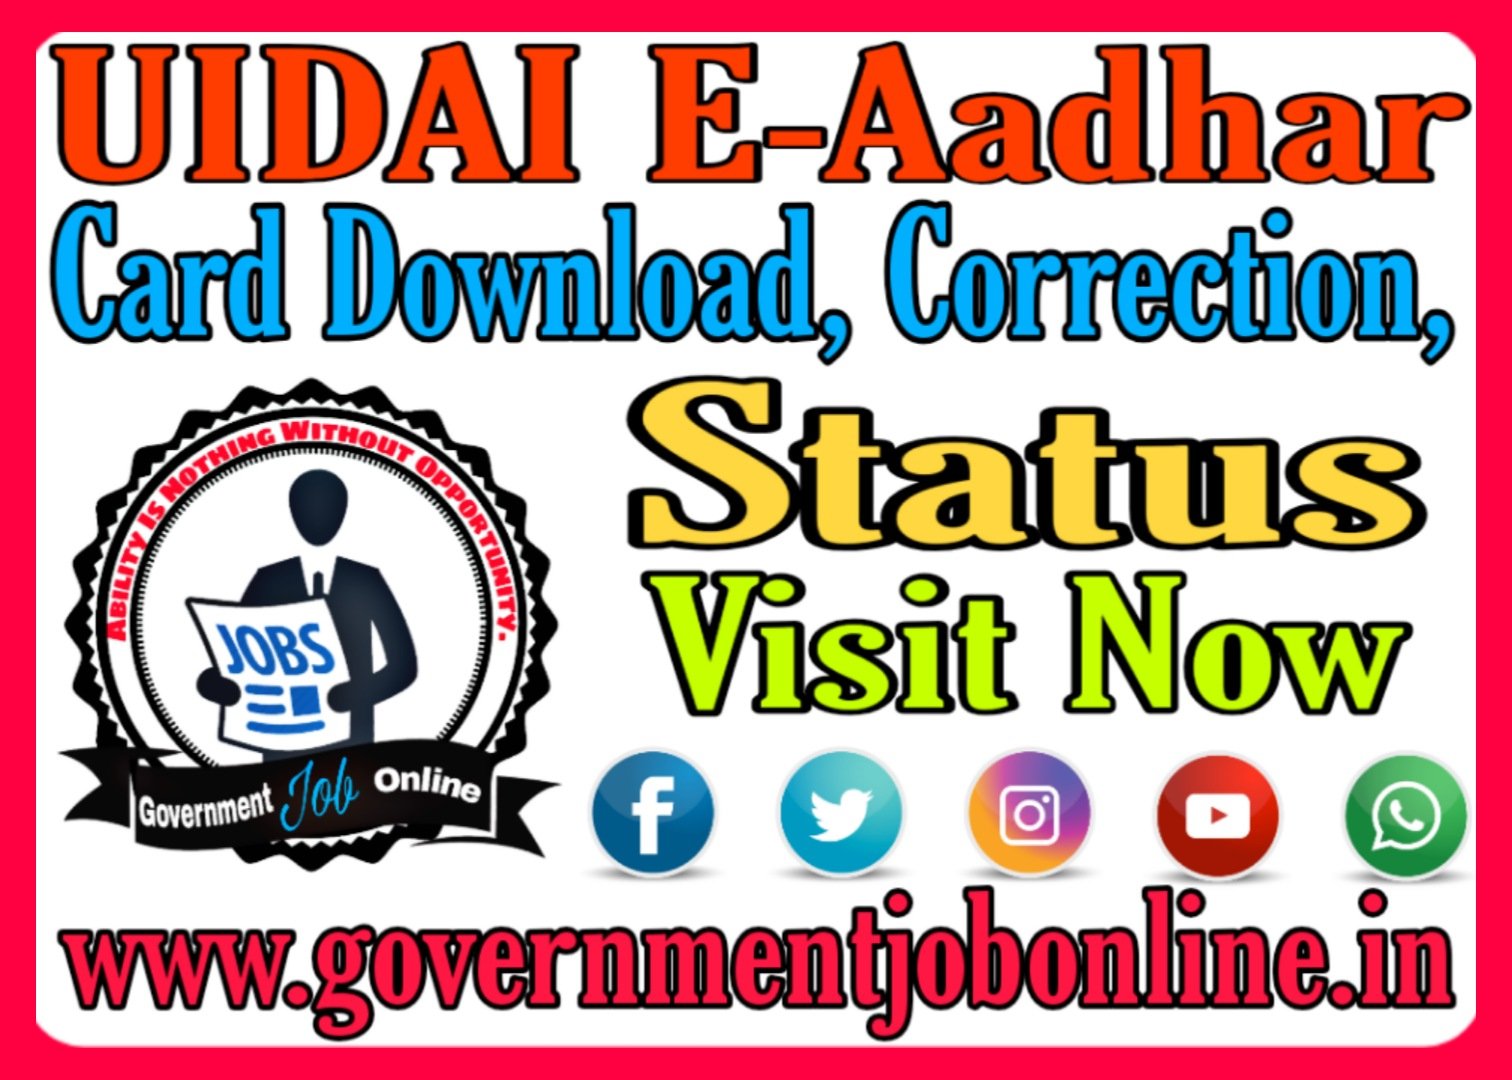 UIDAI E-Aadhar Card Download, Correction, Status